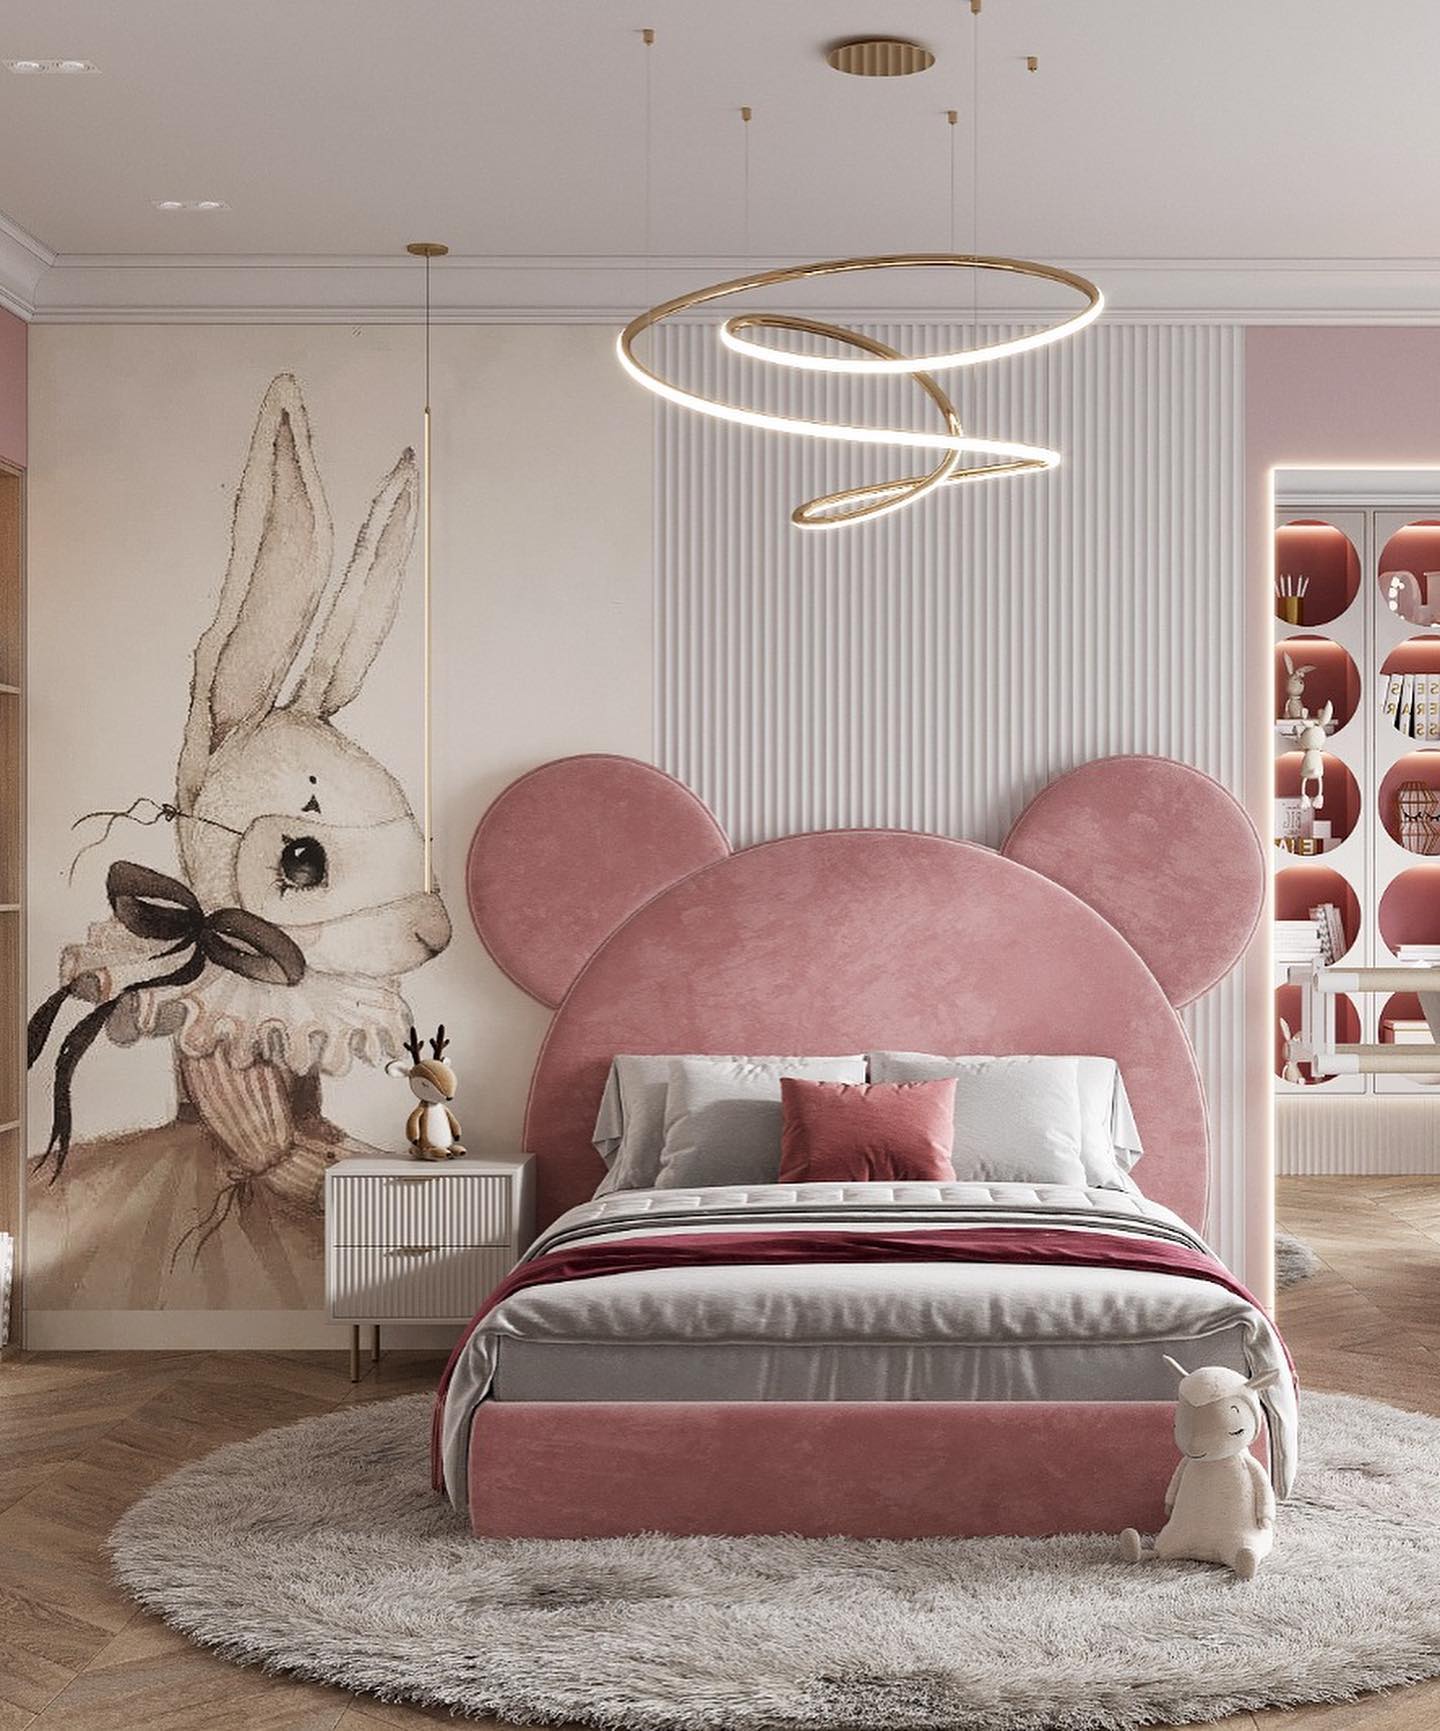 Luxury Pink and Grey Bedroom Decor